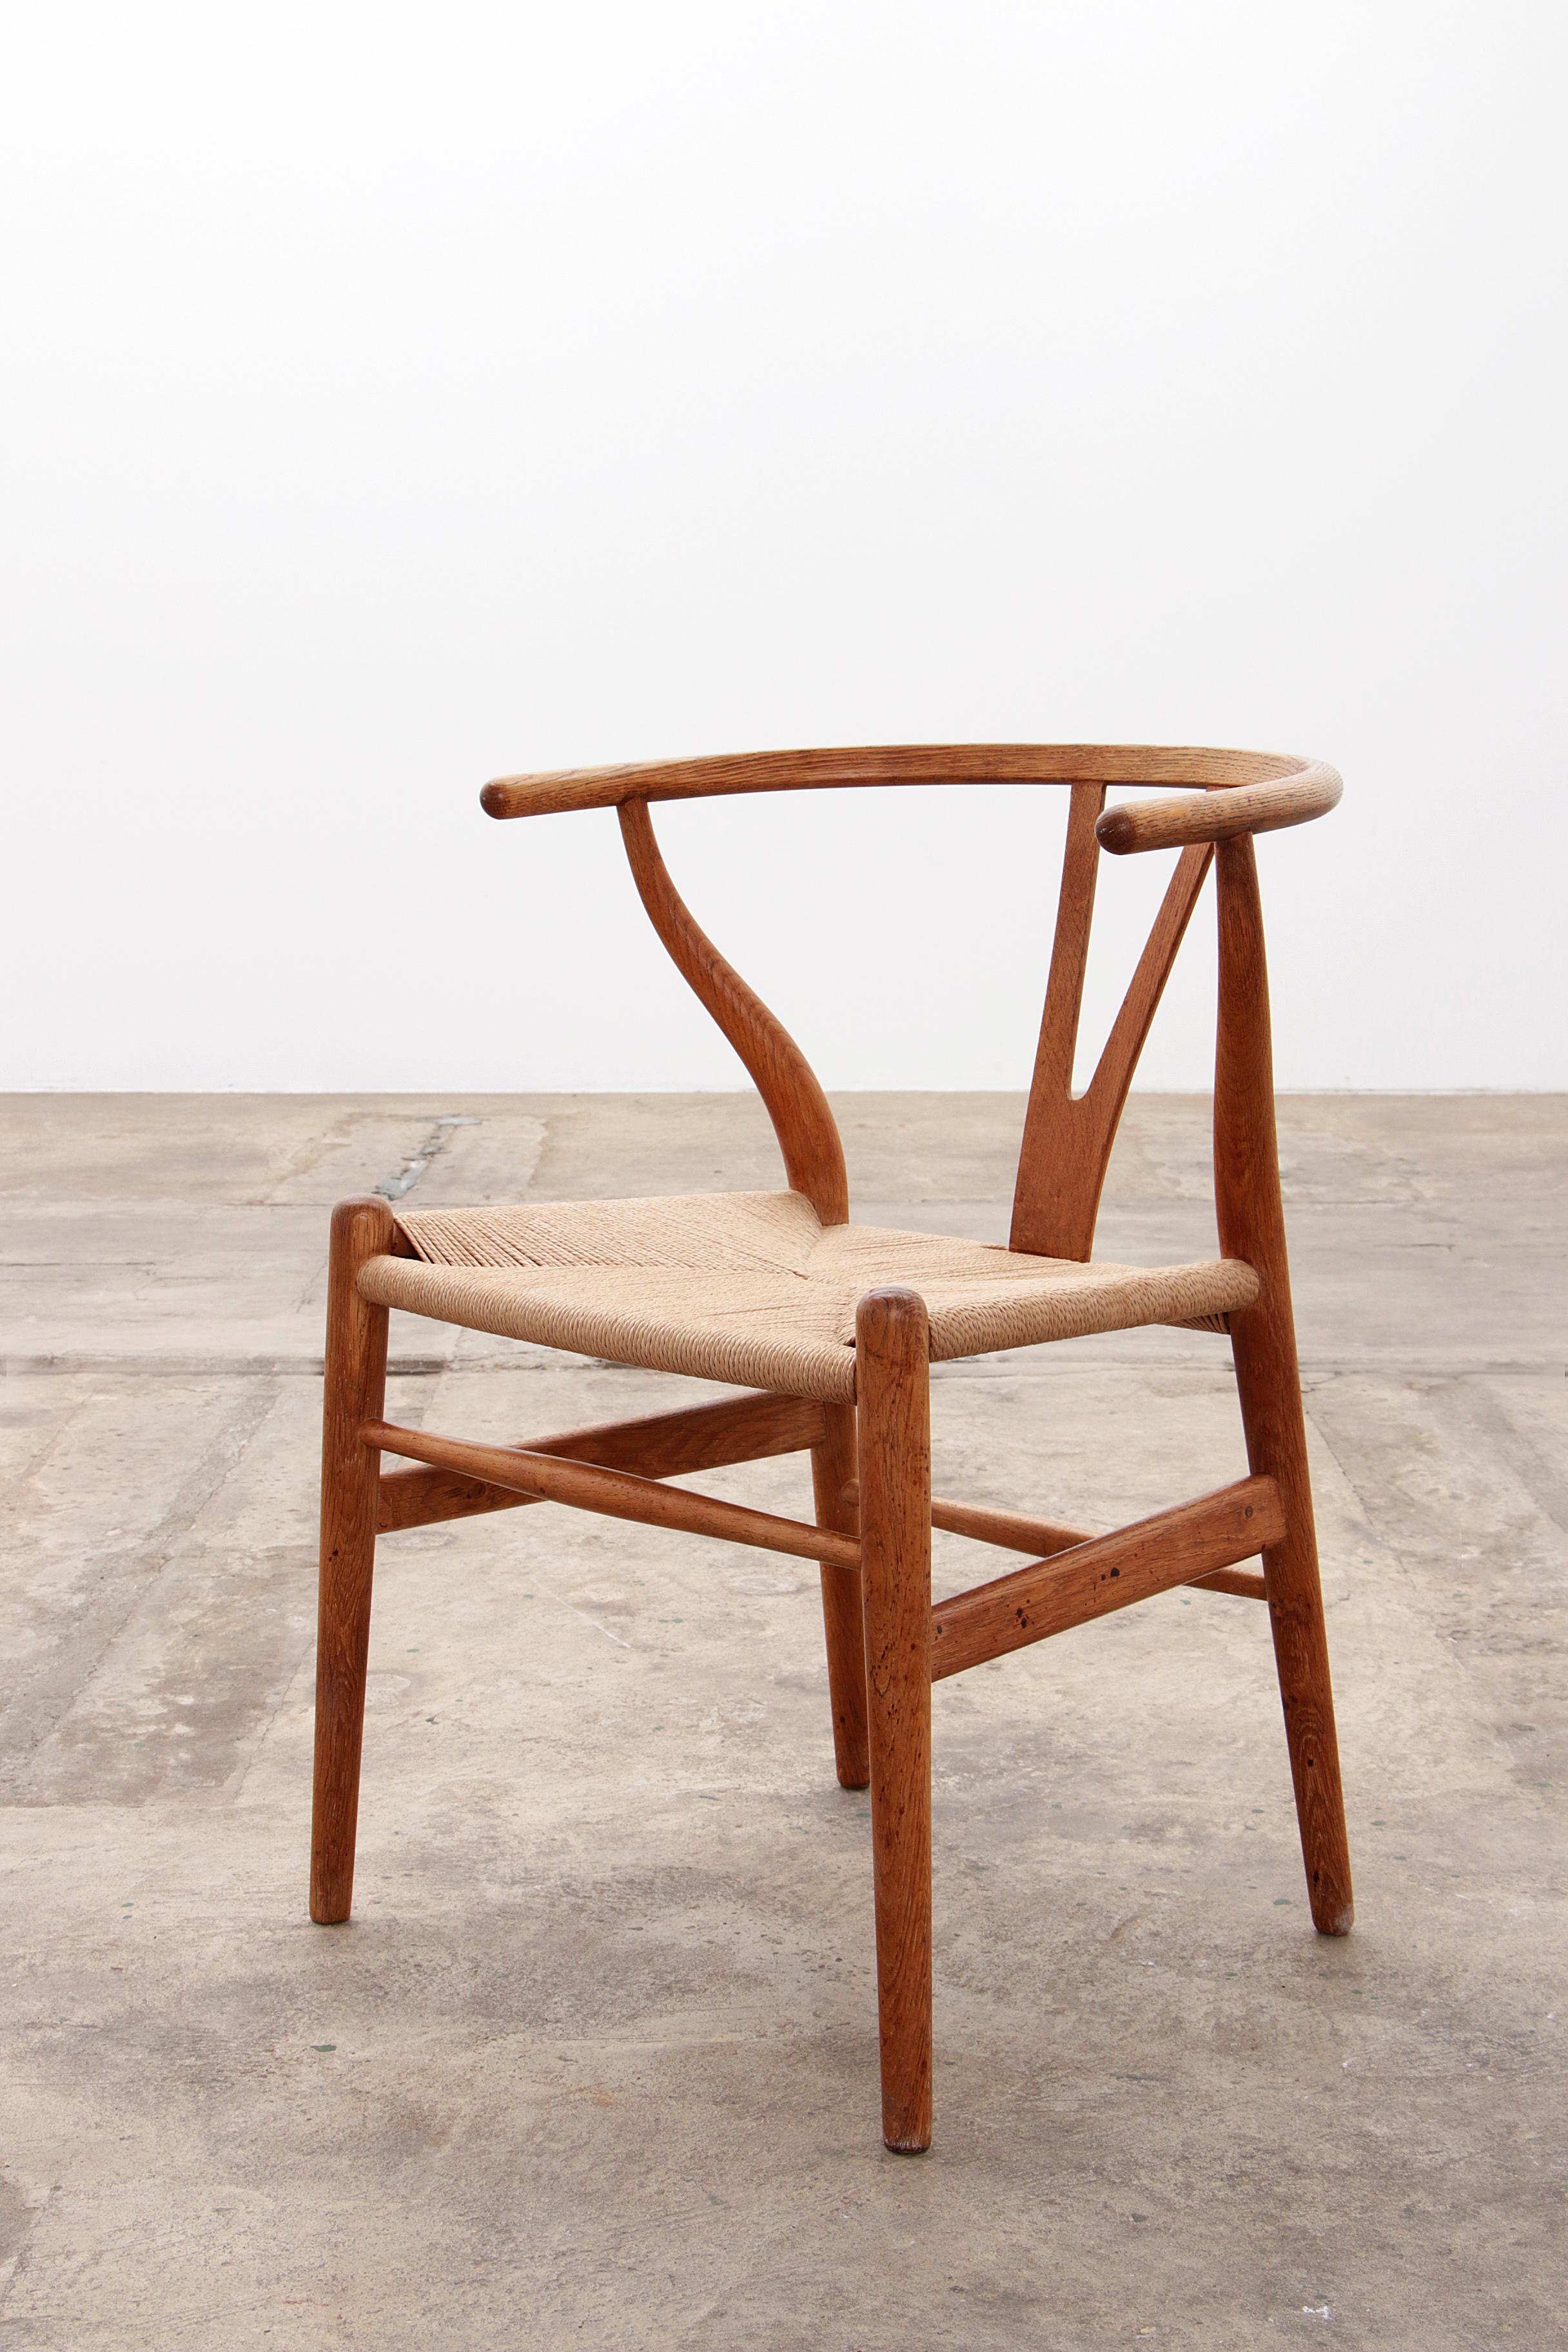 Hans Wegner Oak Wishbone Chairs made by Carl Hansen&Son 1